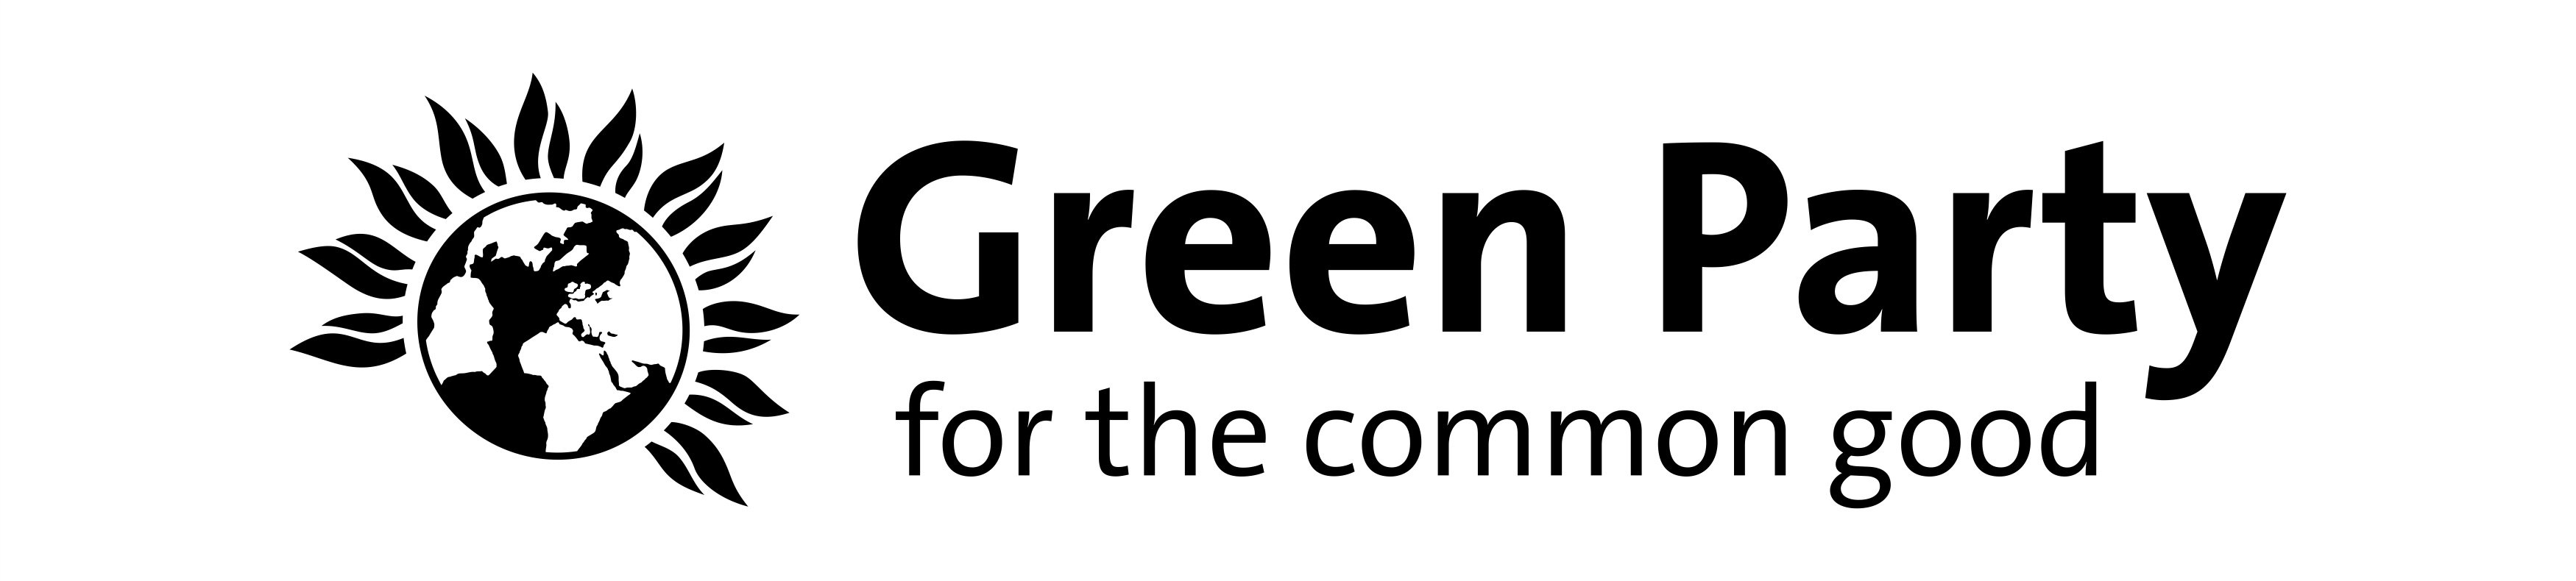 Green and Gray Logo - Green Party Visual Identity